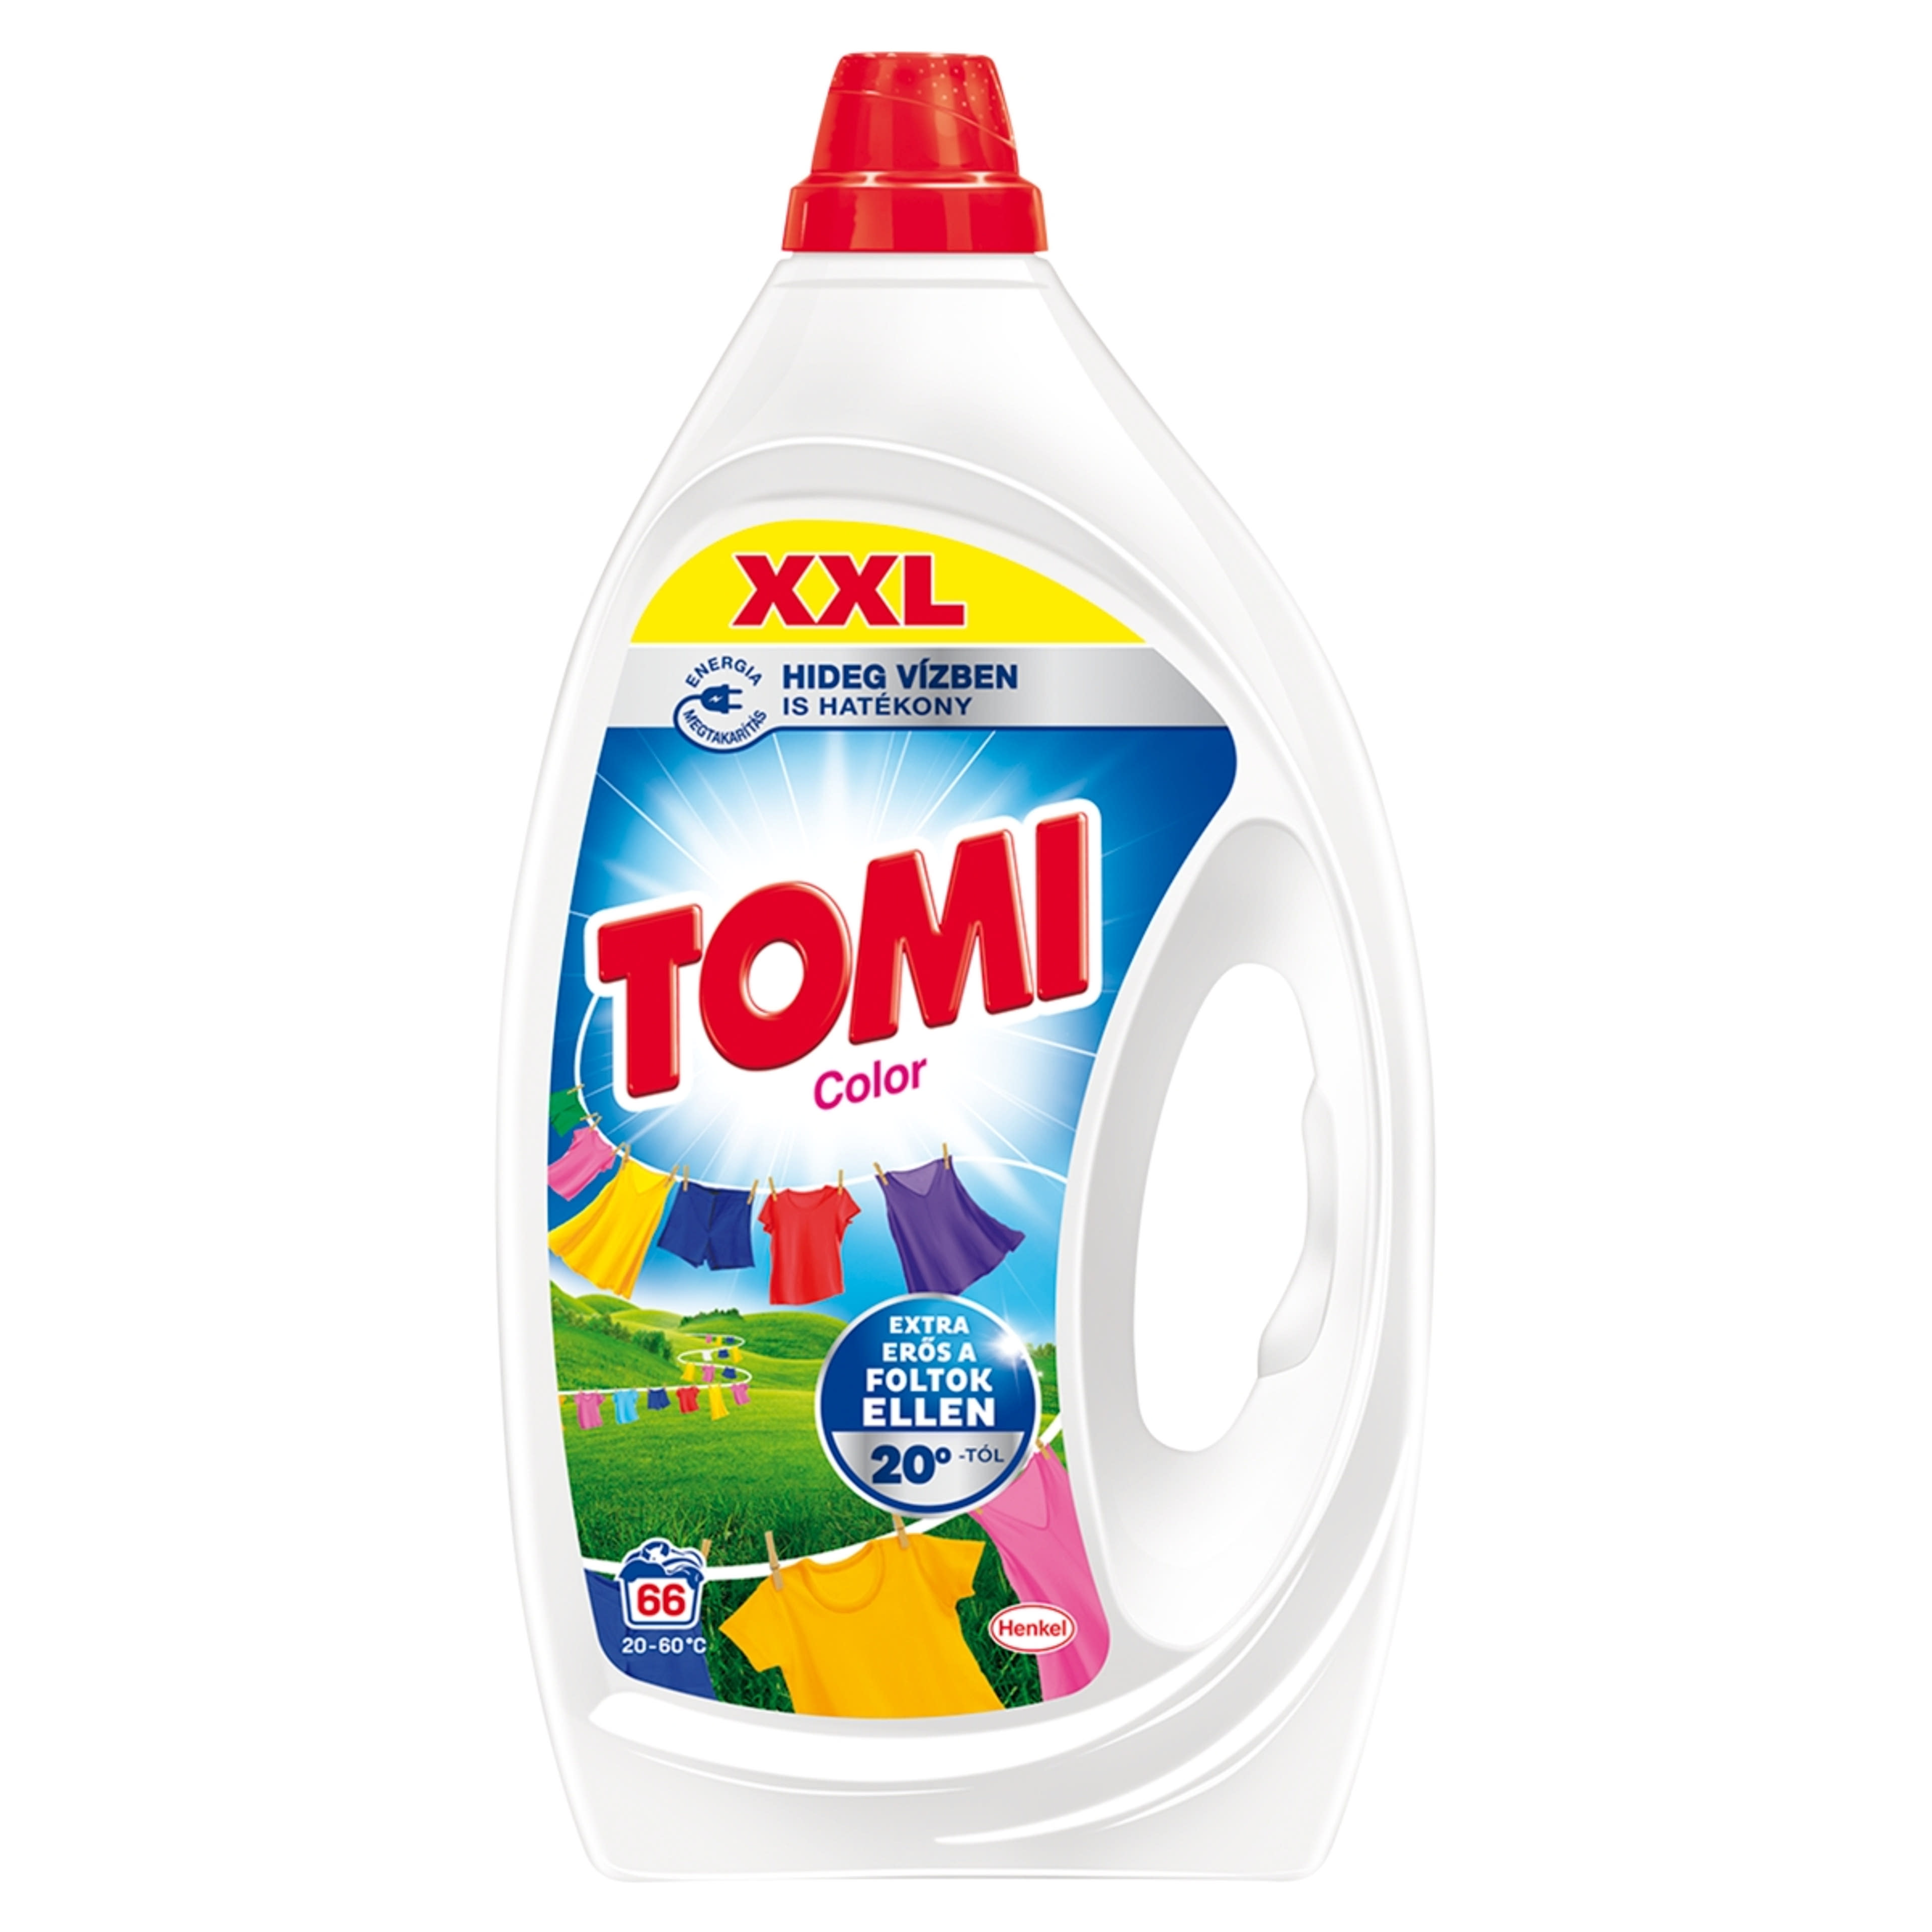 Tomi Color folyékony mosószer 66 mosás - 2970 ml